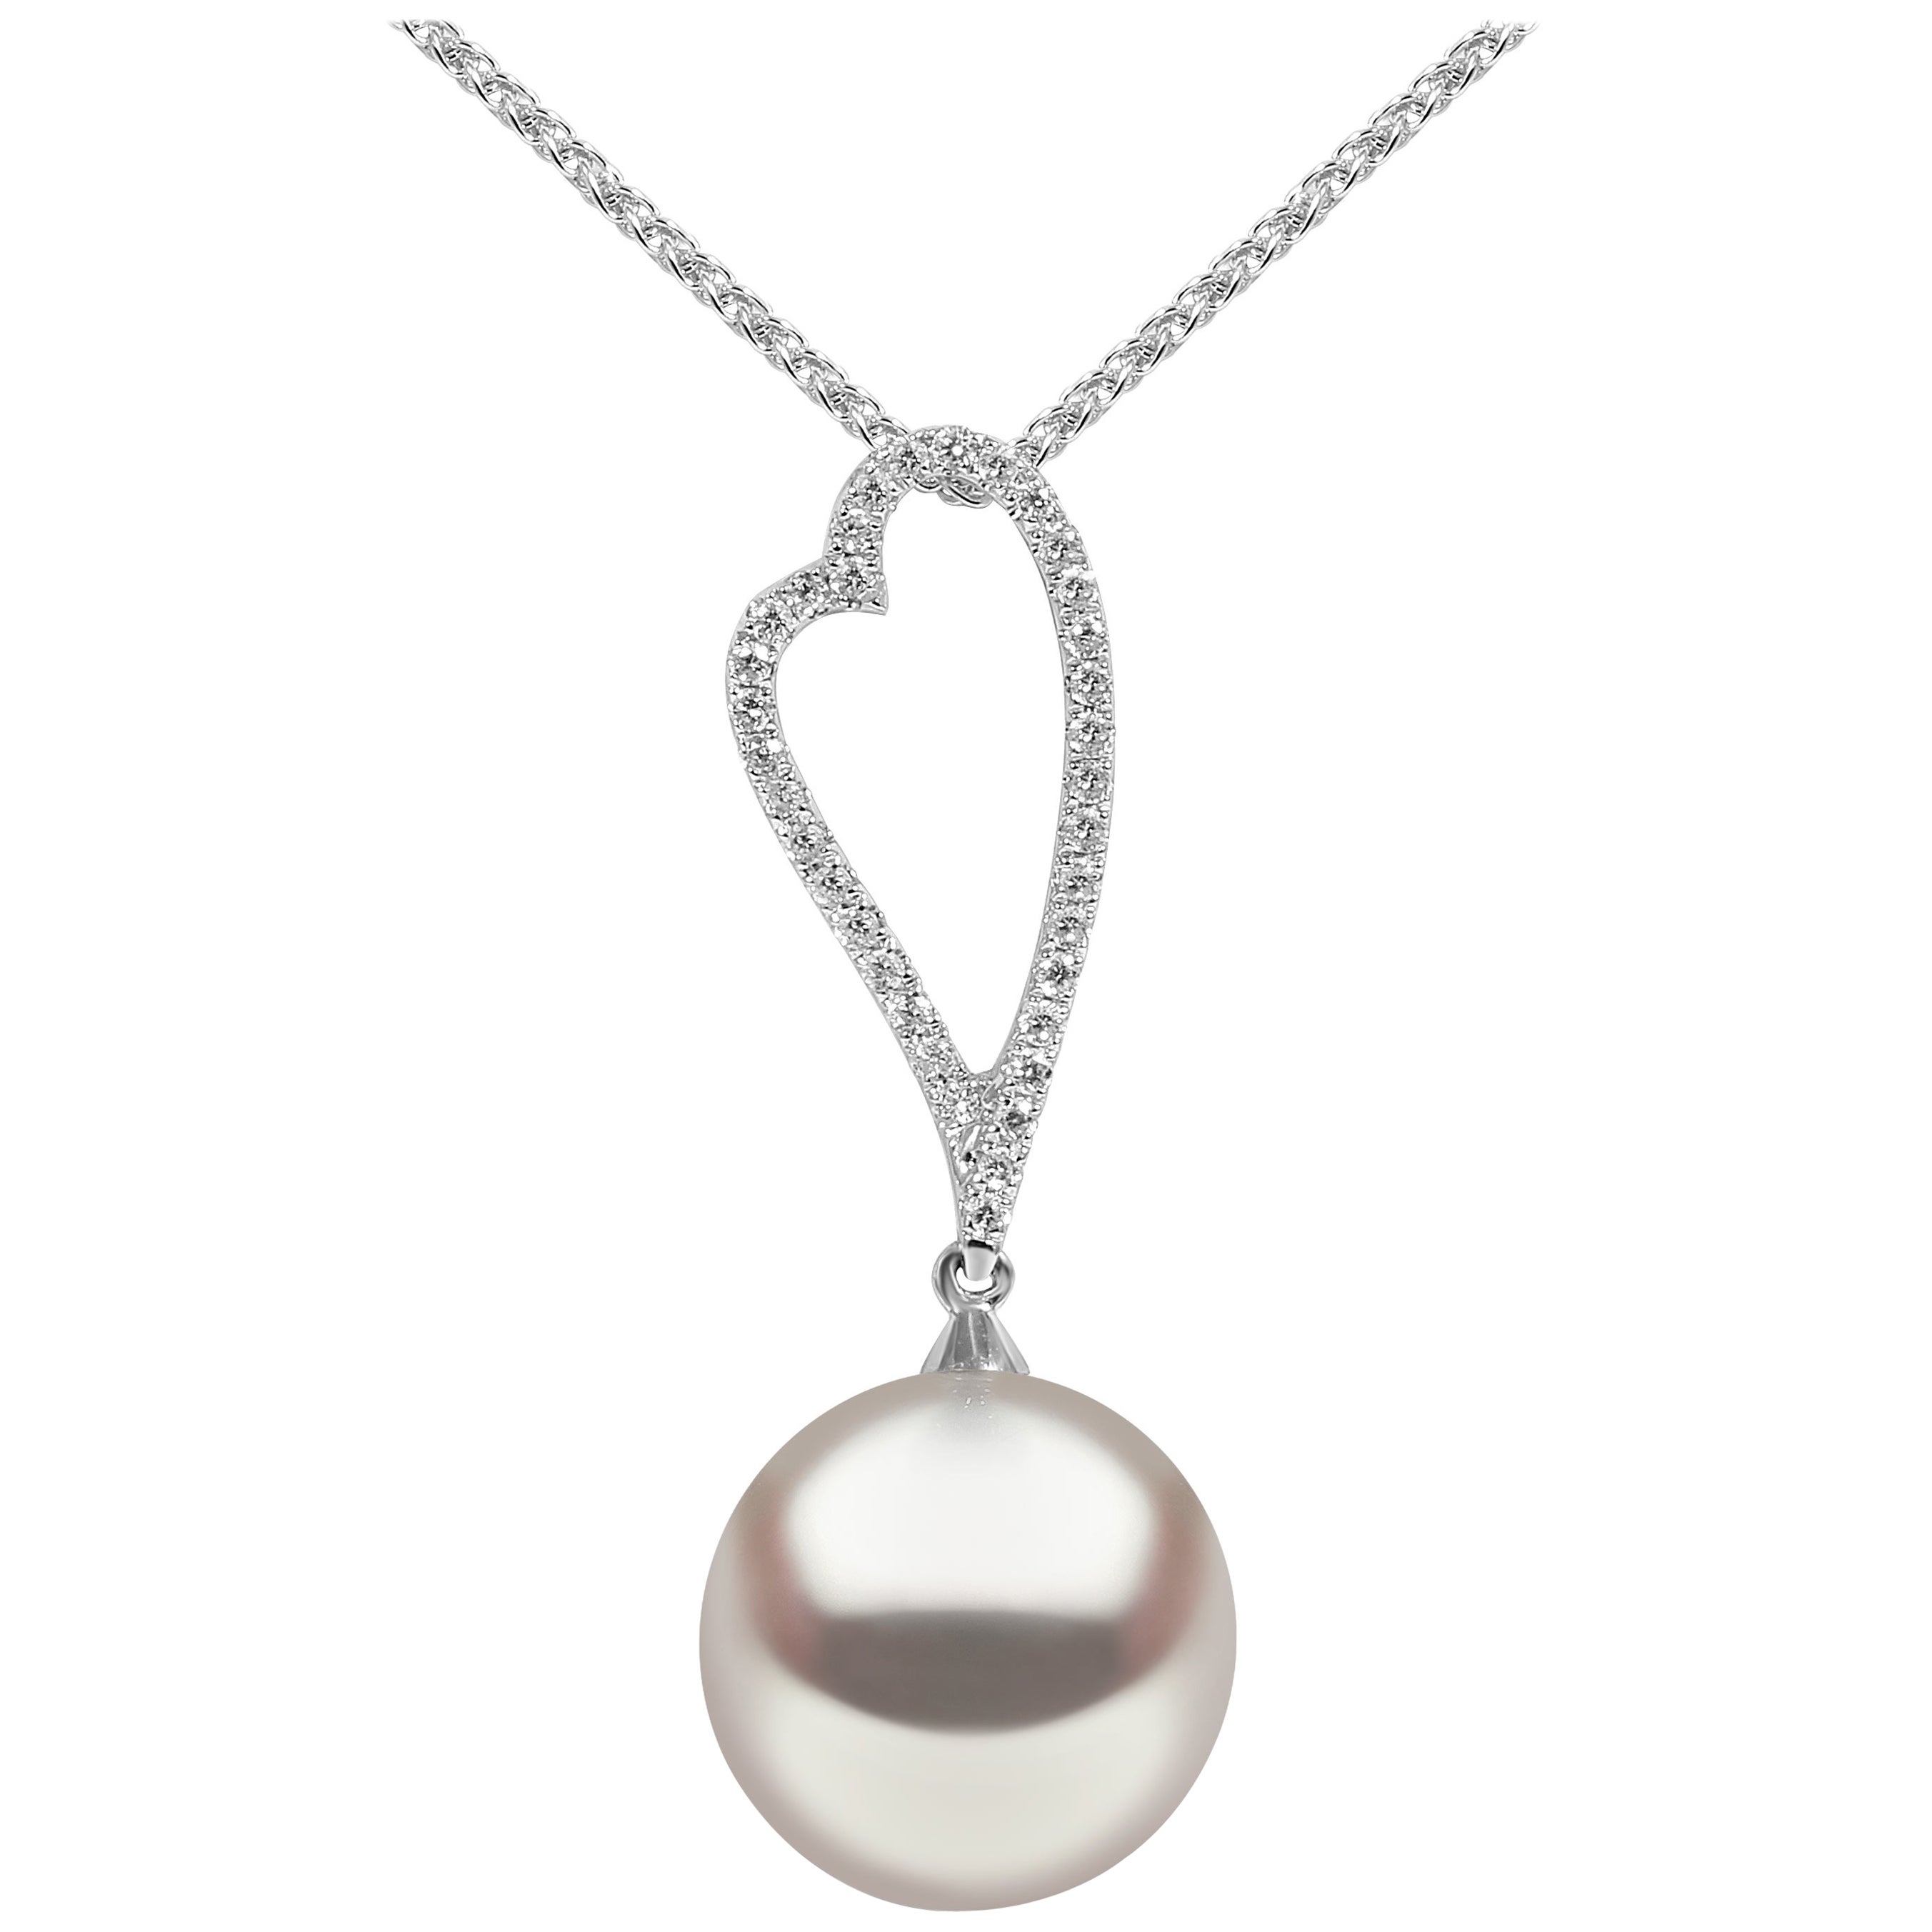 Yoko London South Sea Pearl and Diamond Necklace in 18 Karat White Gold